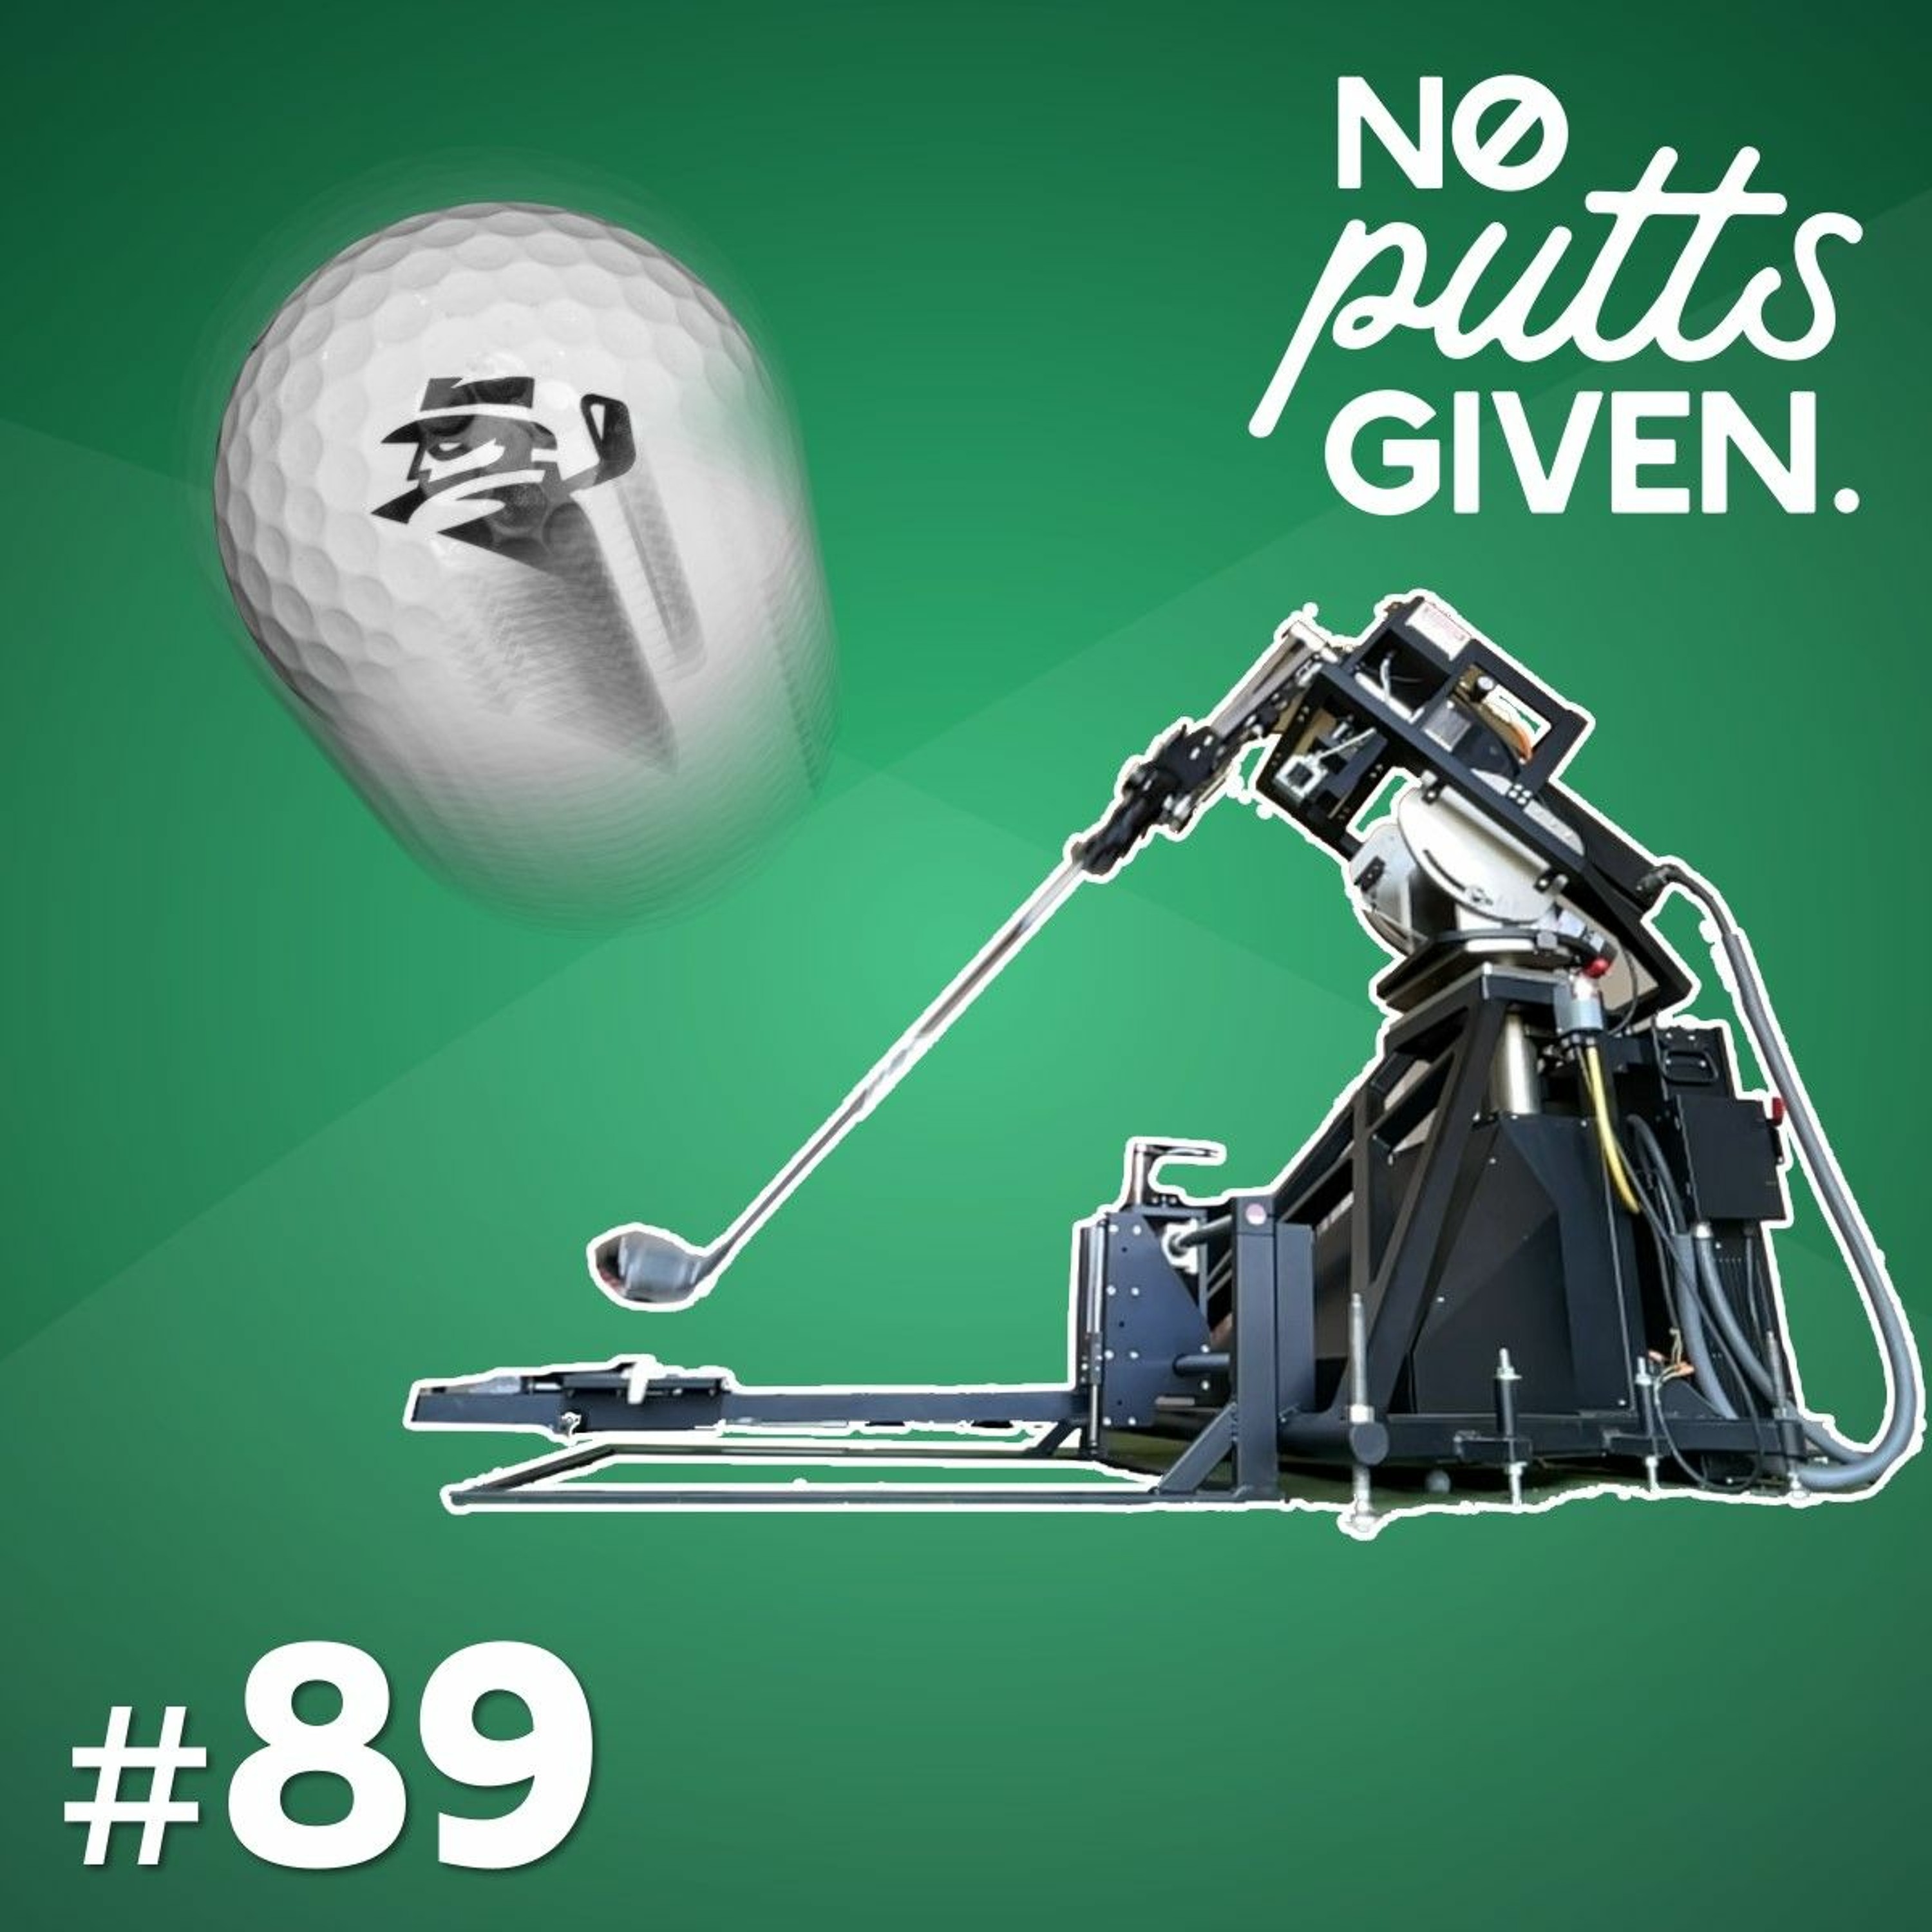 The Biggest Golf Ball Test Yet | NPG 89